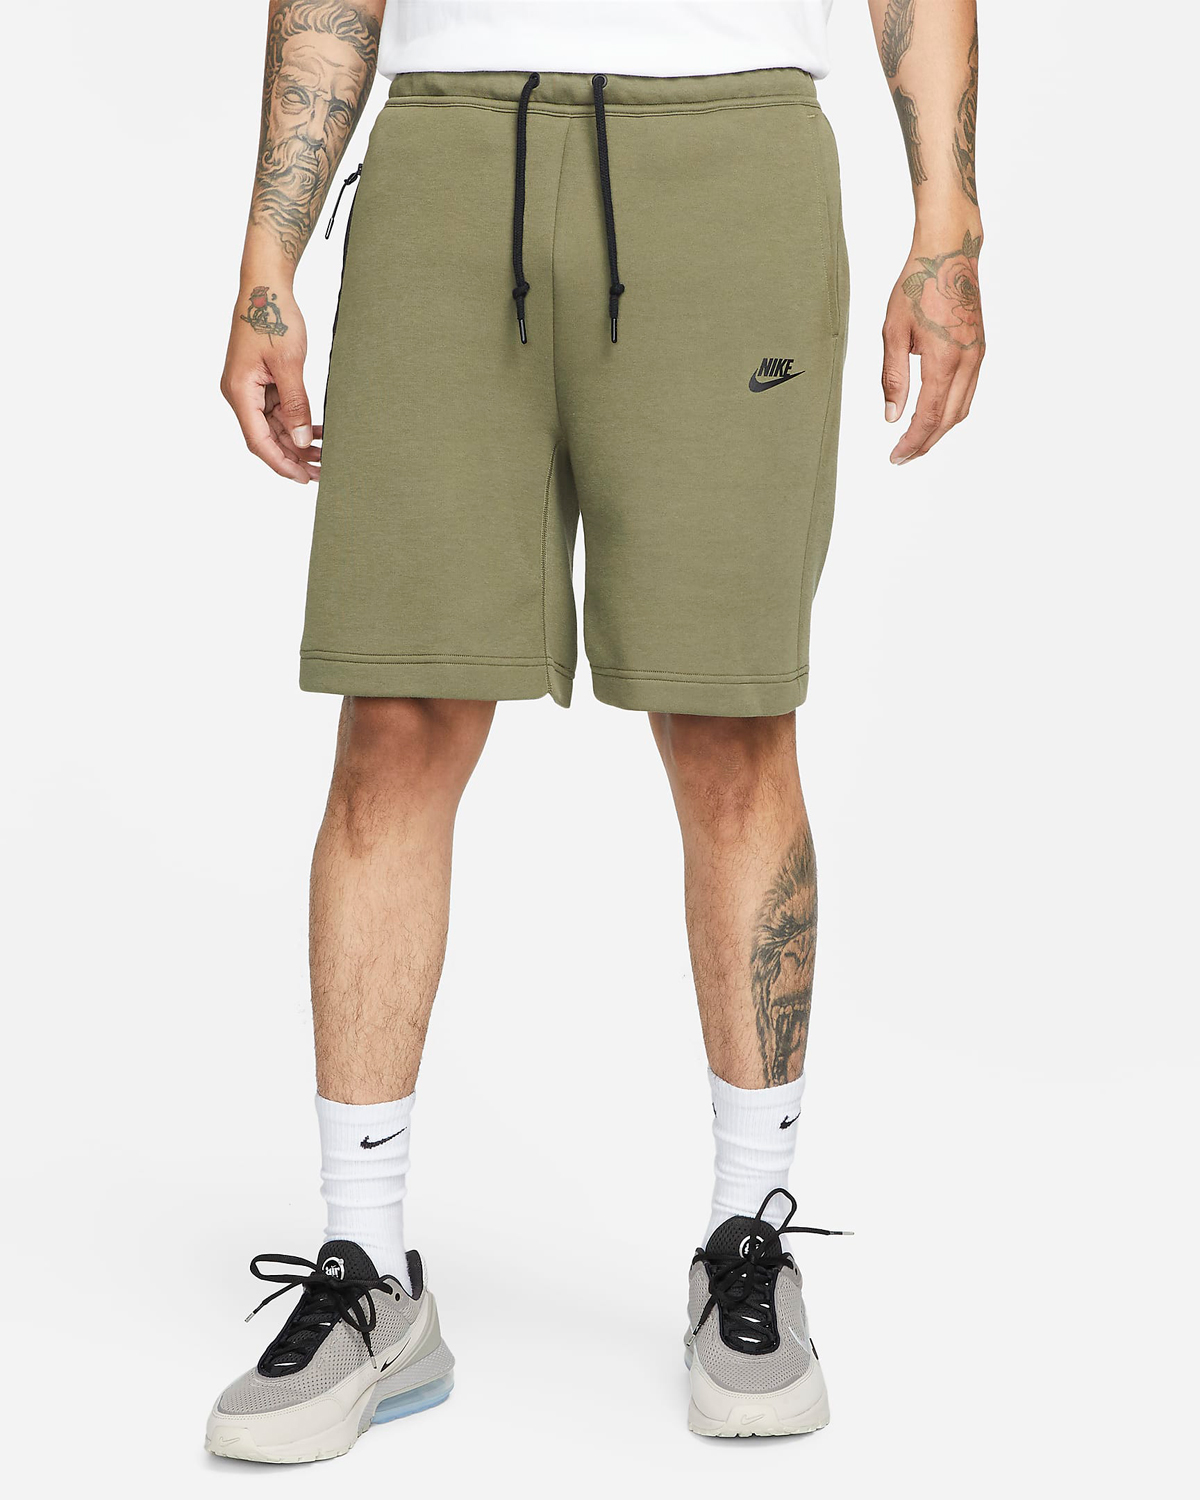 Nike-Tech-Fleece-Shorts-Medium-Olive-Green